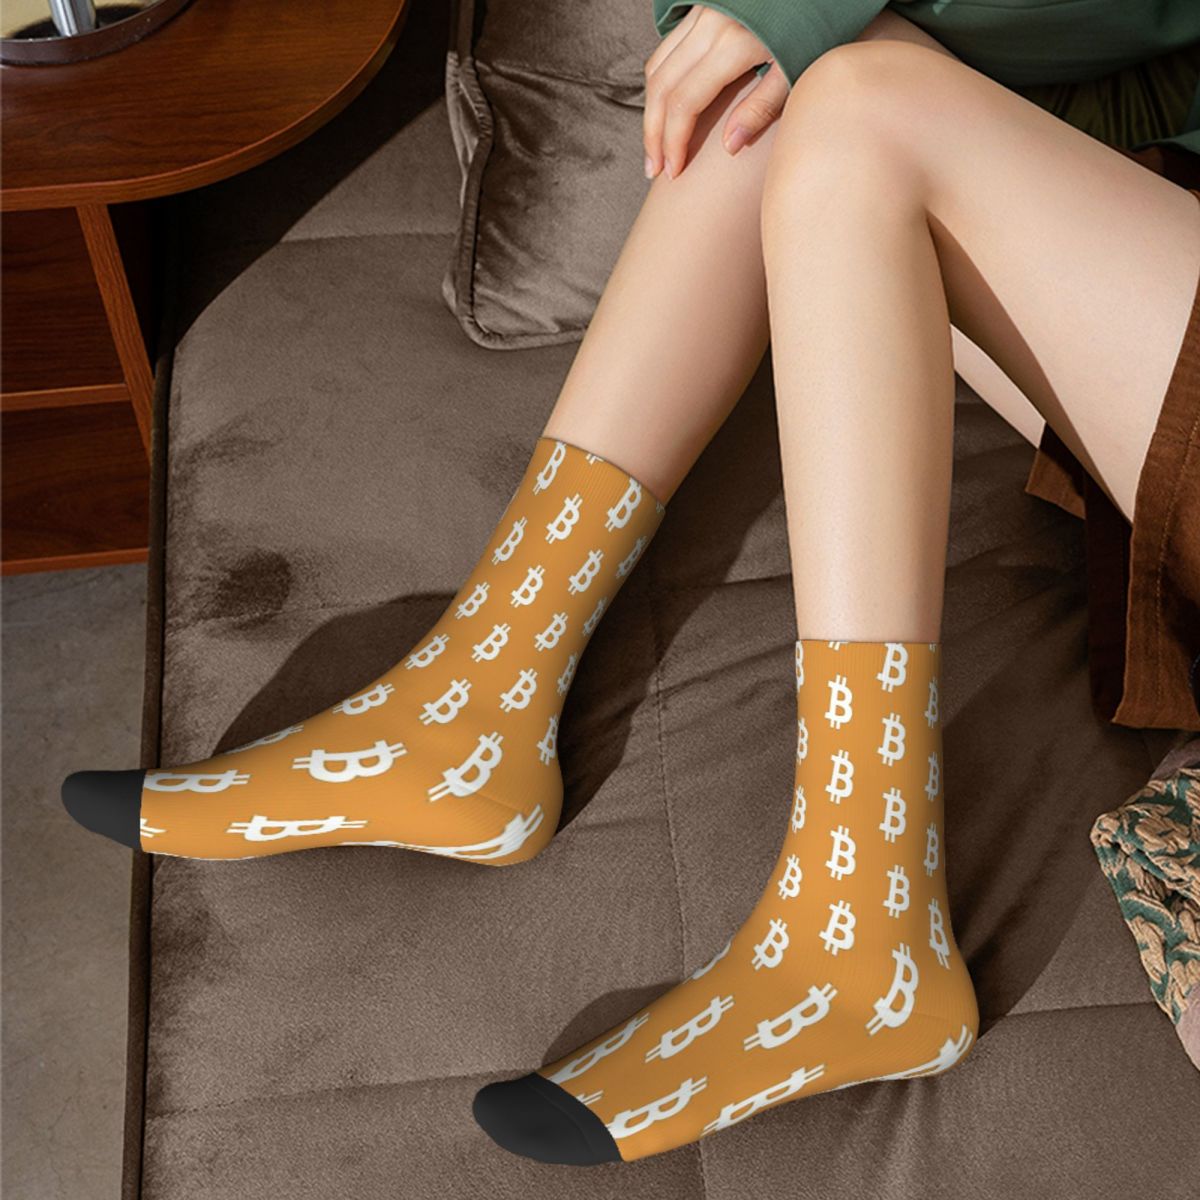 Socks Bitcoin btc bitcoin-themed socks